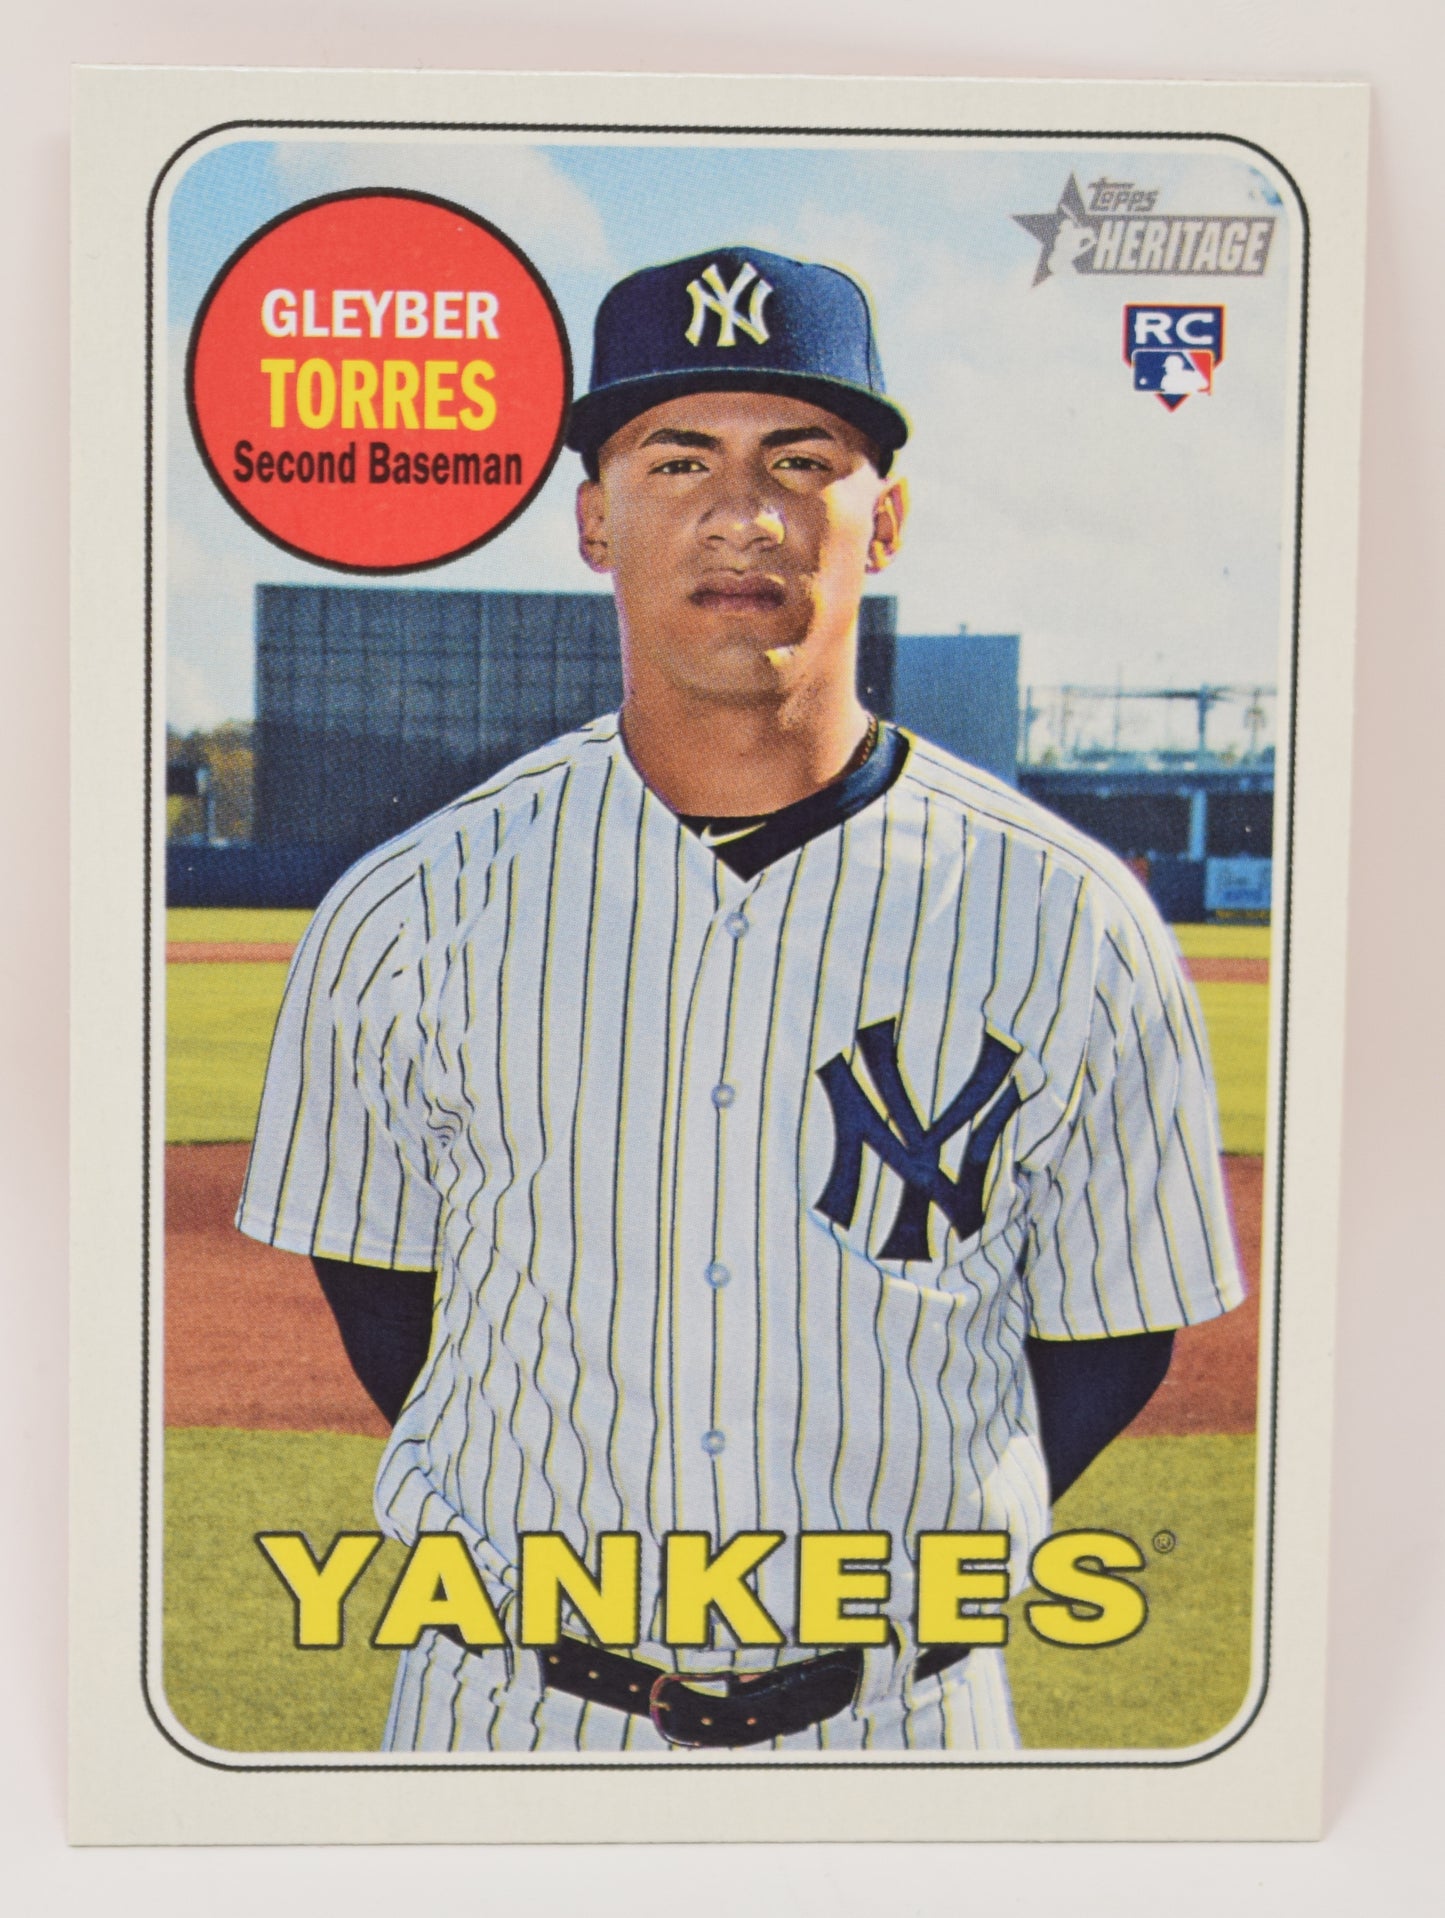 Gleyber Torres Topps 2018 Heritage Baseball RC Rookie Card Yankees 603